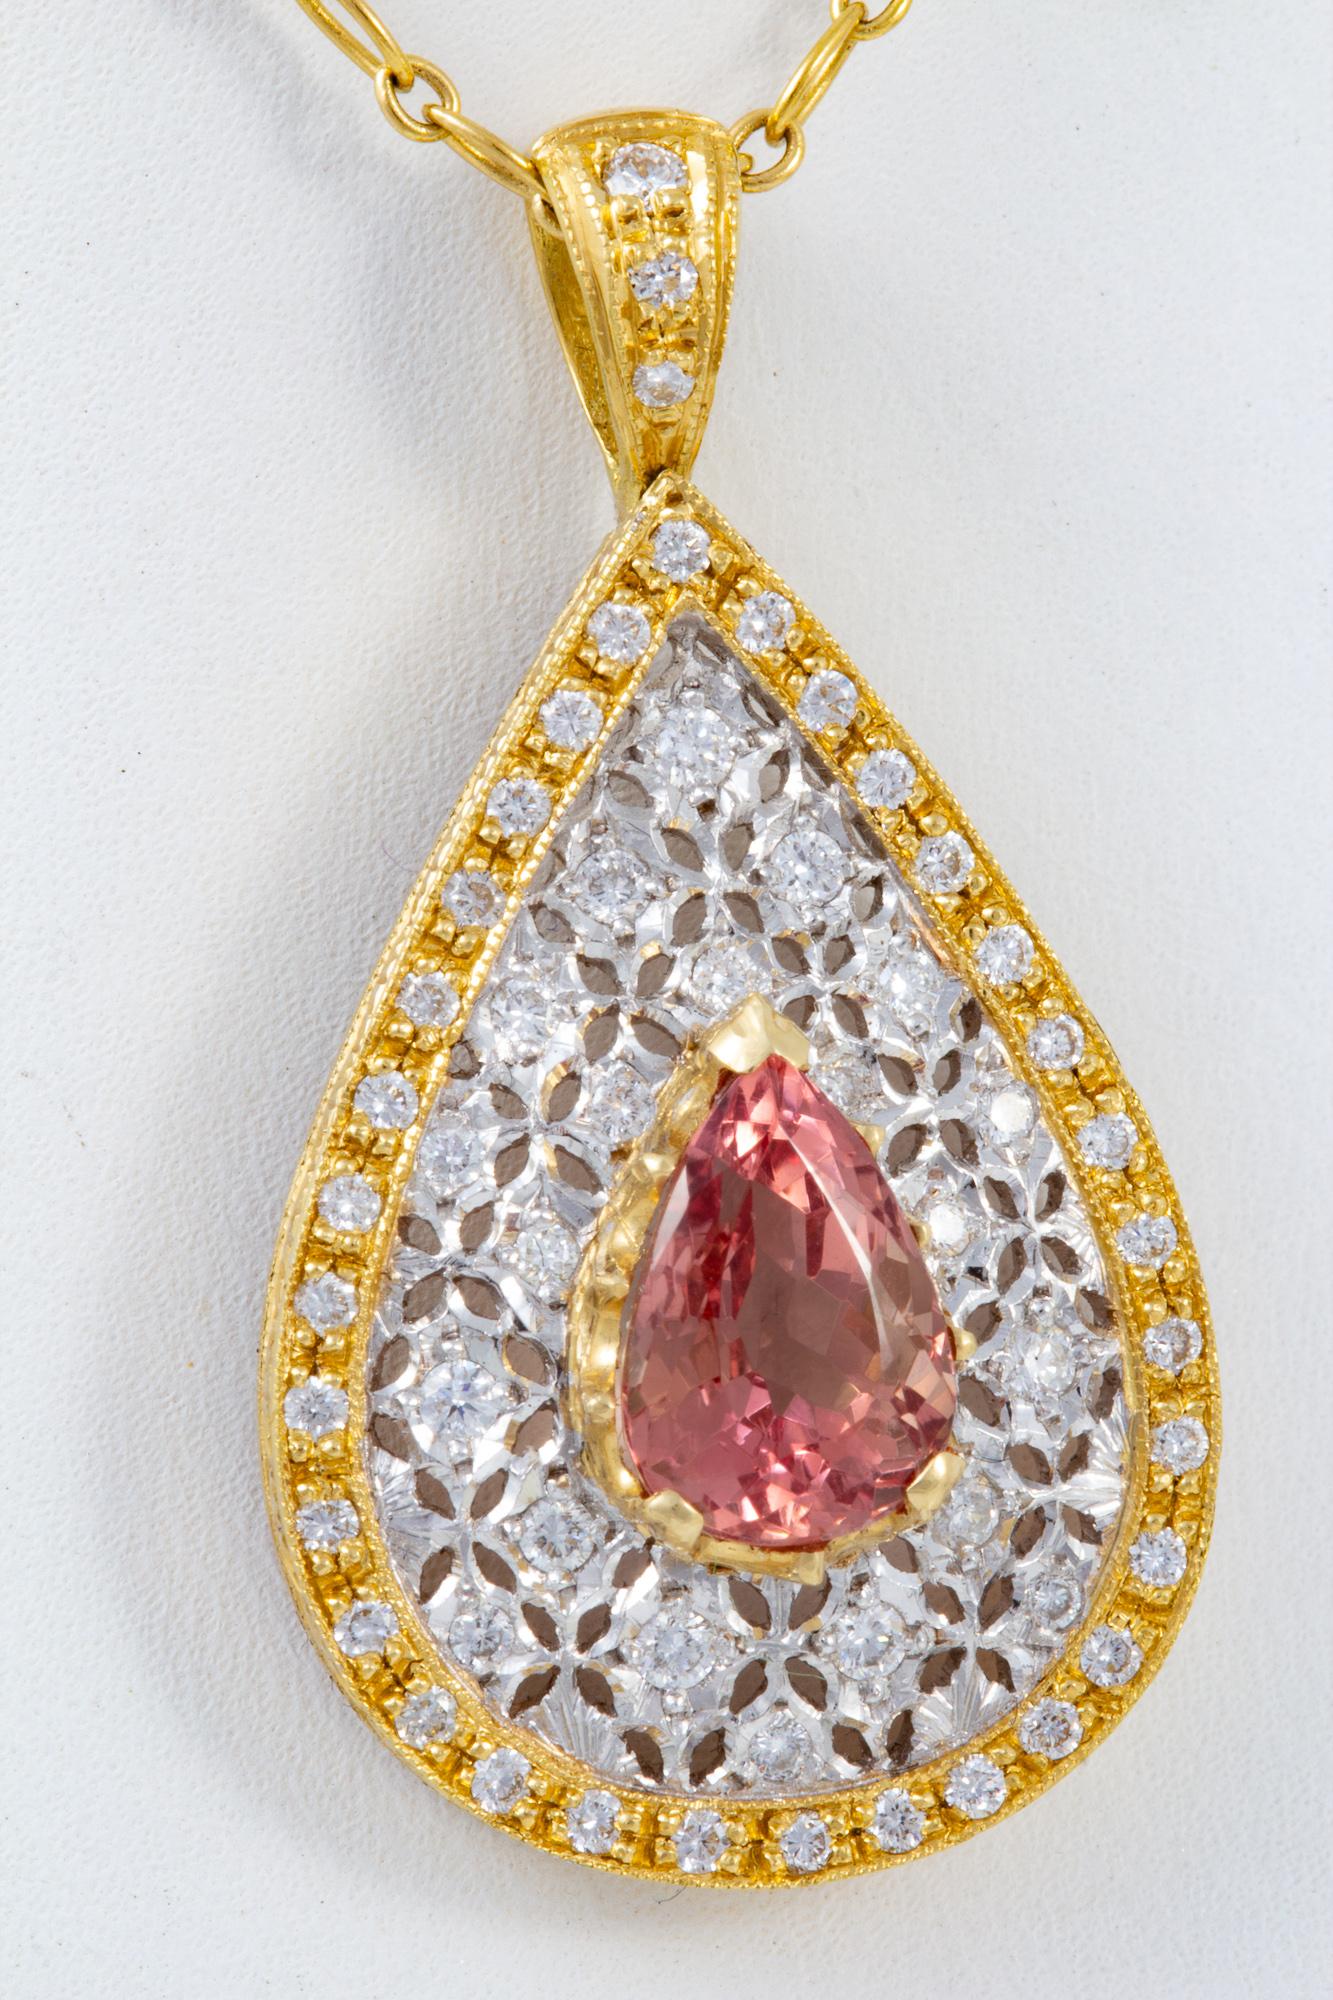 Italian Florentine Engraved Pendant Featuring 2.63 carat Imperial Topaz For Sale 2